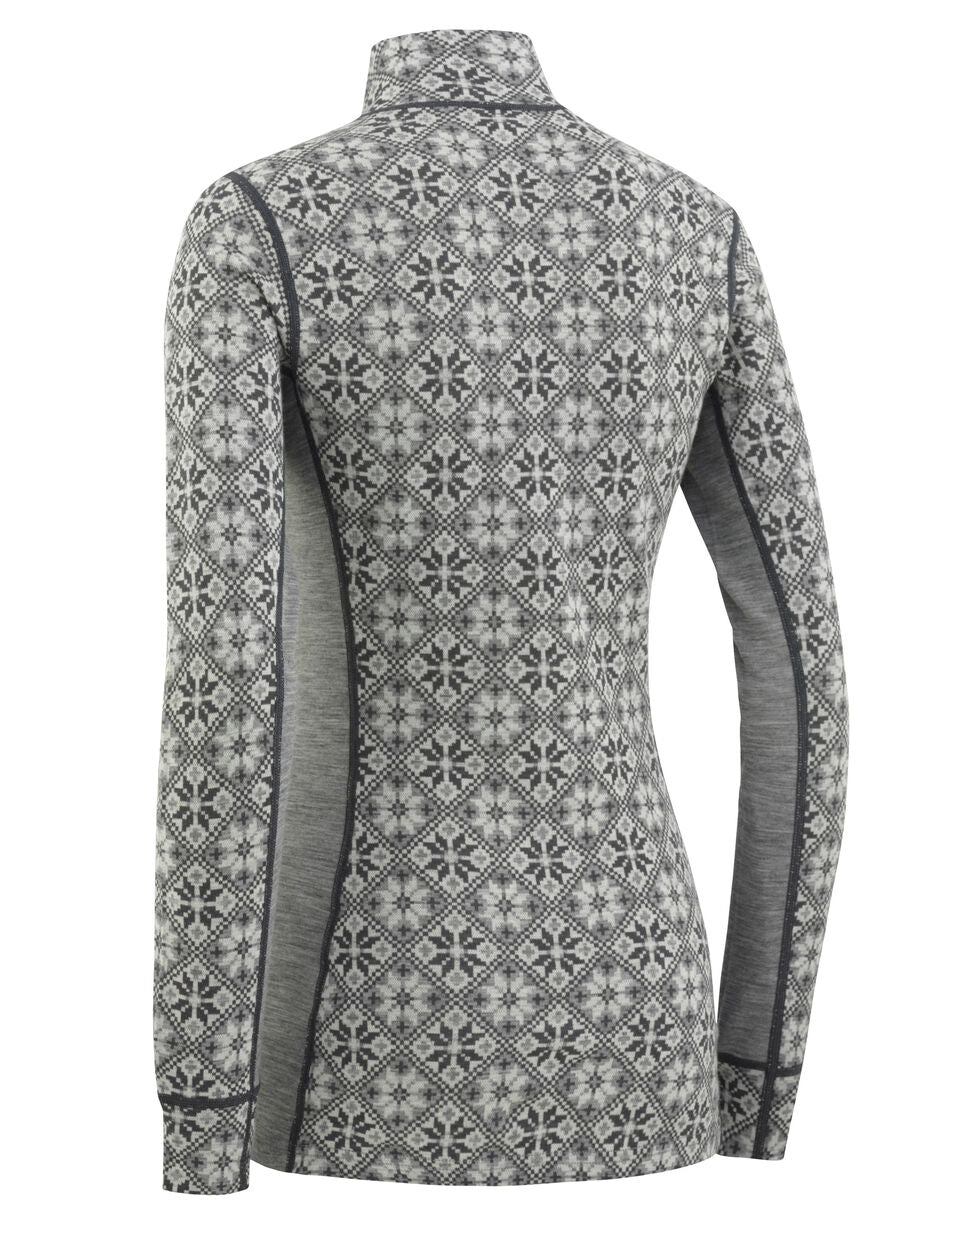 Karai Traa gray and white pattern merino wool quarter zip base layer with long sleeves, back view.  